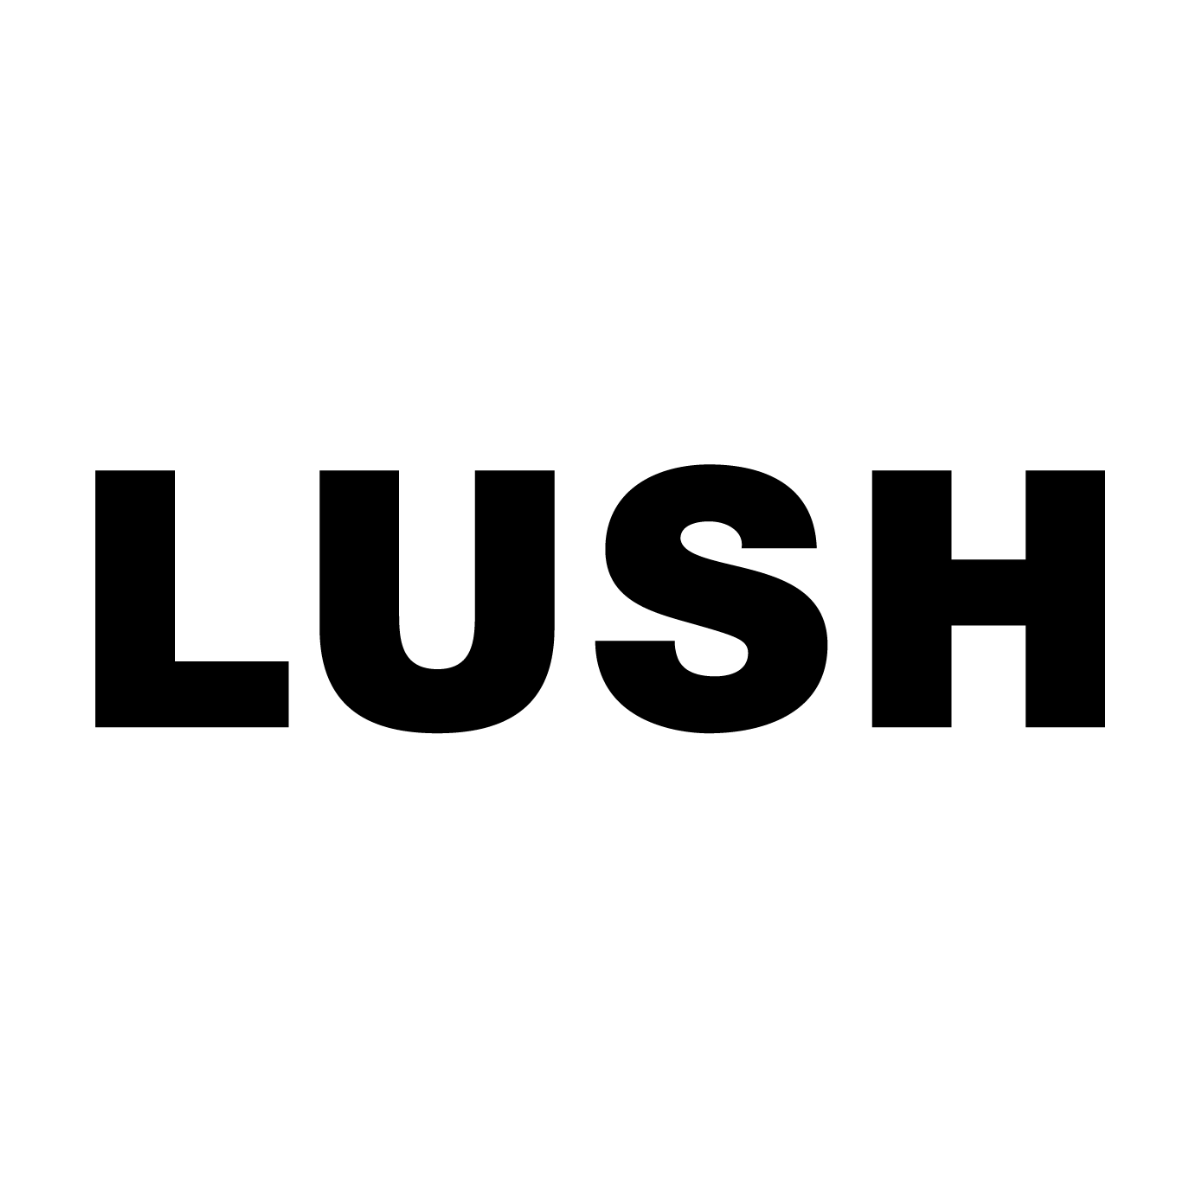 LUSH Cosmetics Green Hills - Opening Soon Maitland